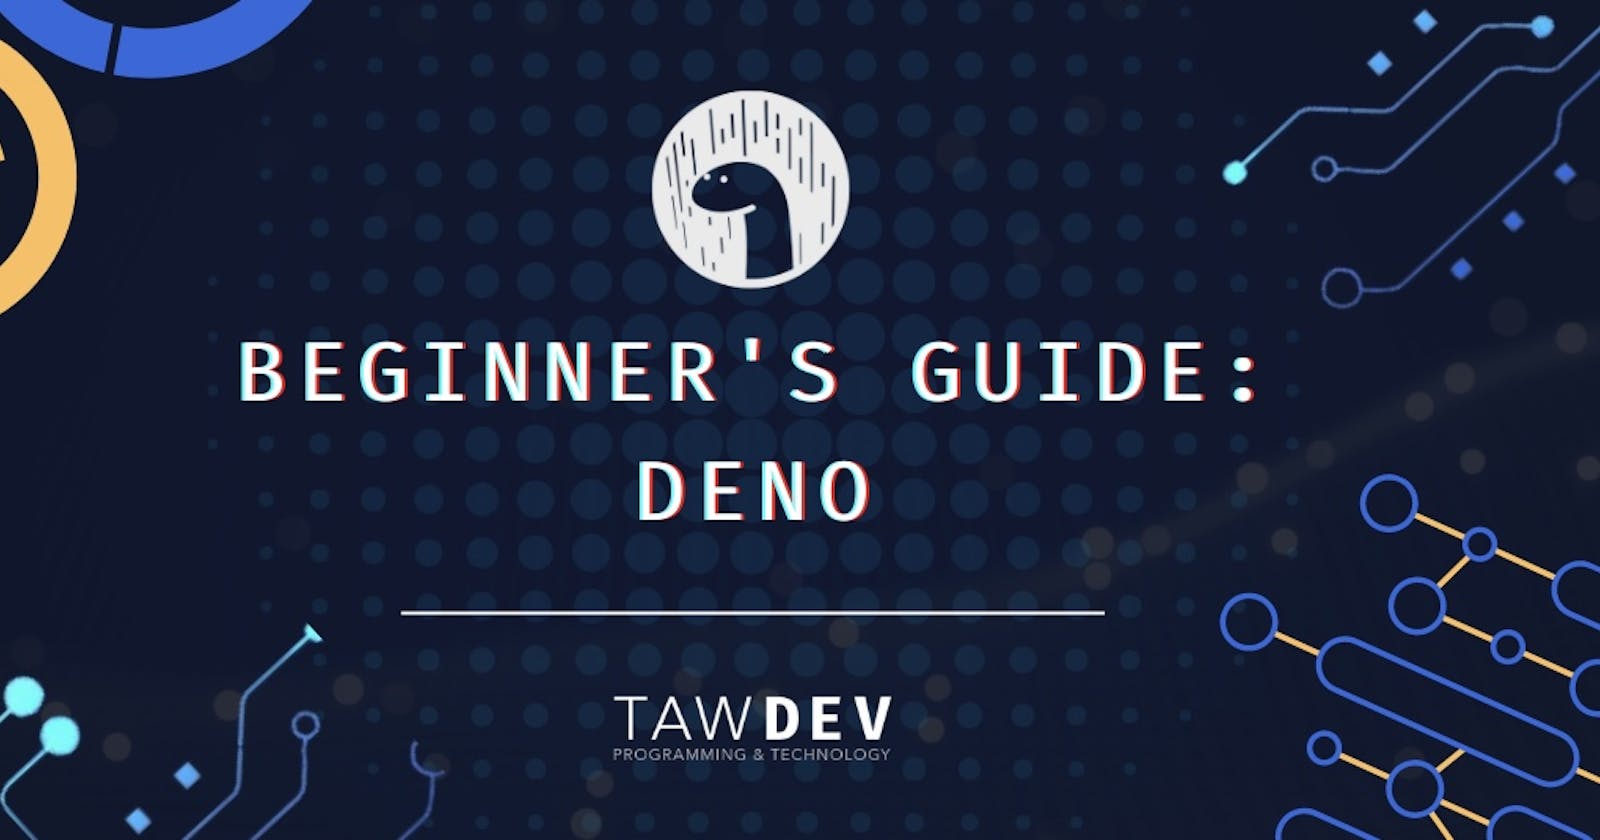 Beginner's Guide to Deno